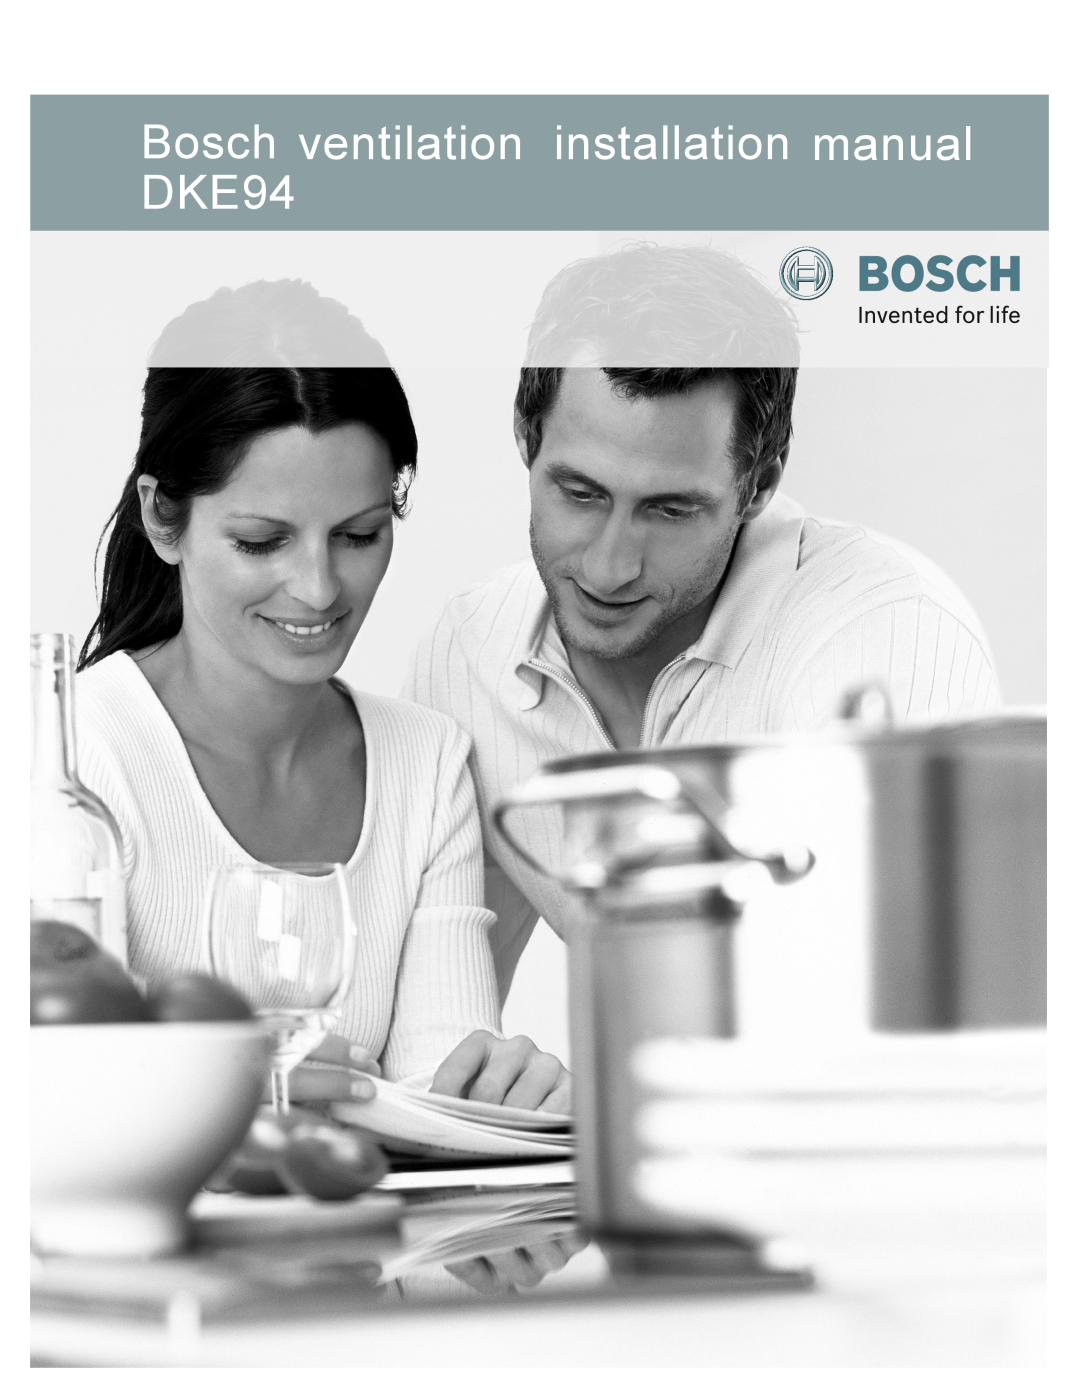 Bosch Appliances installation manual Bosch ventilation installation manual DKE94 